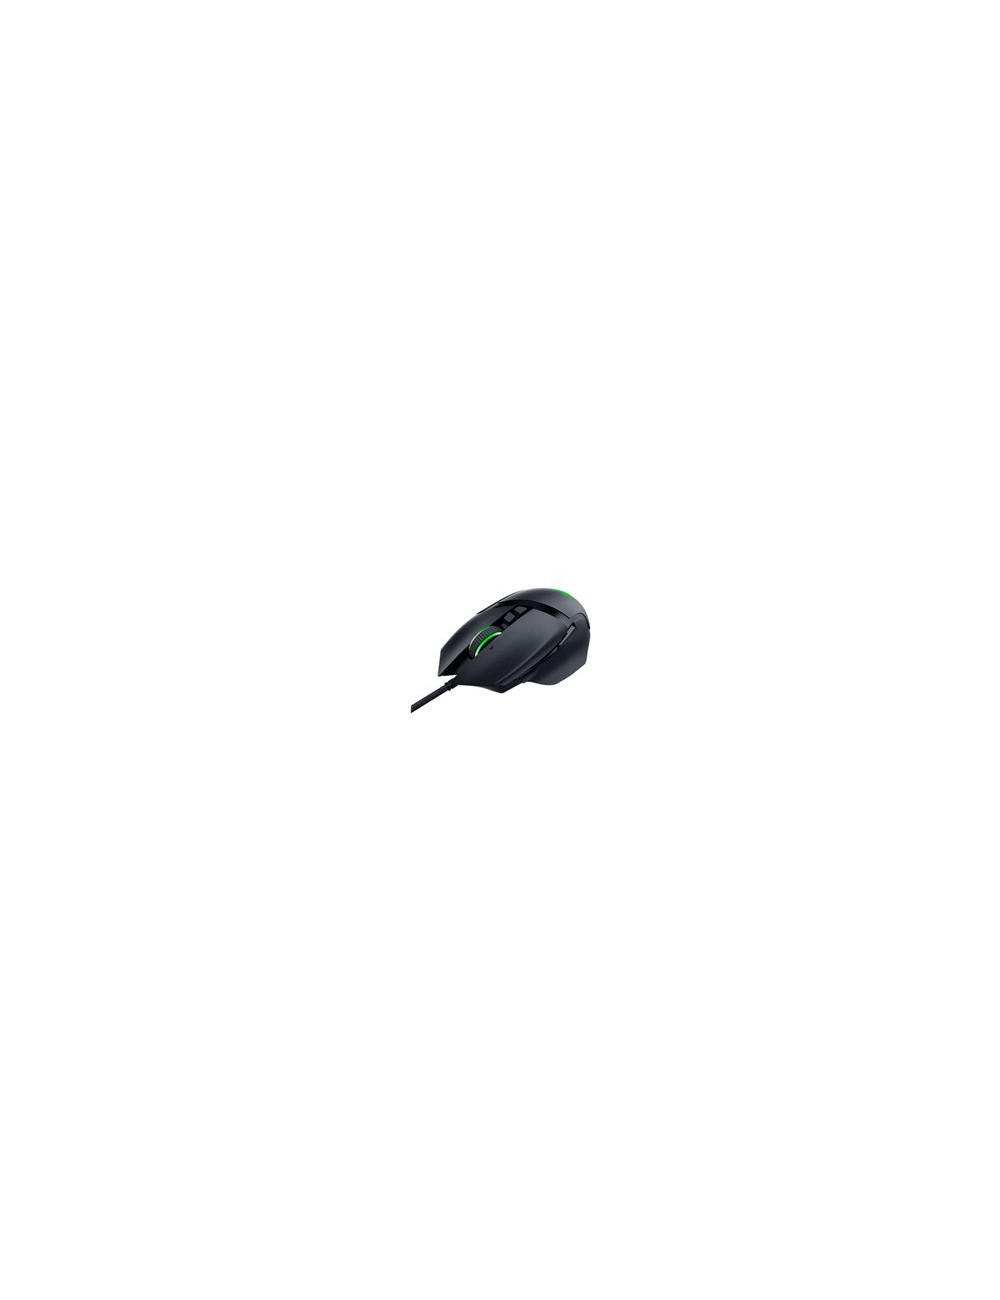 RAZER Basilisk V3 Gaming Mouse